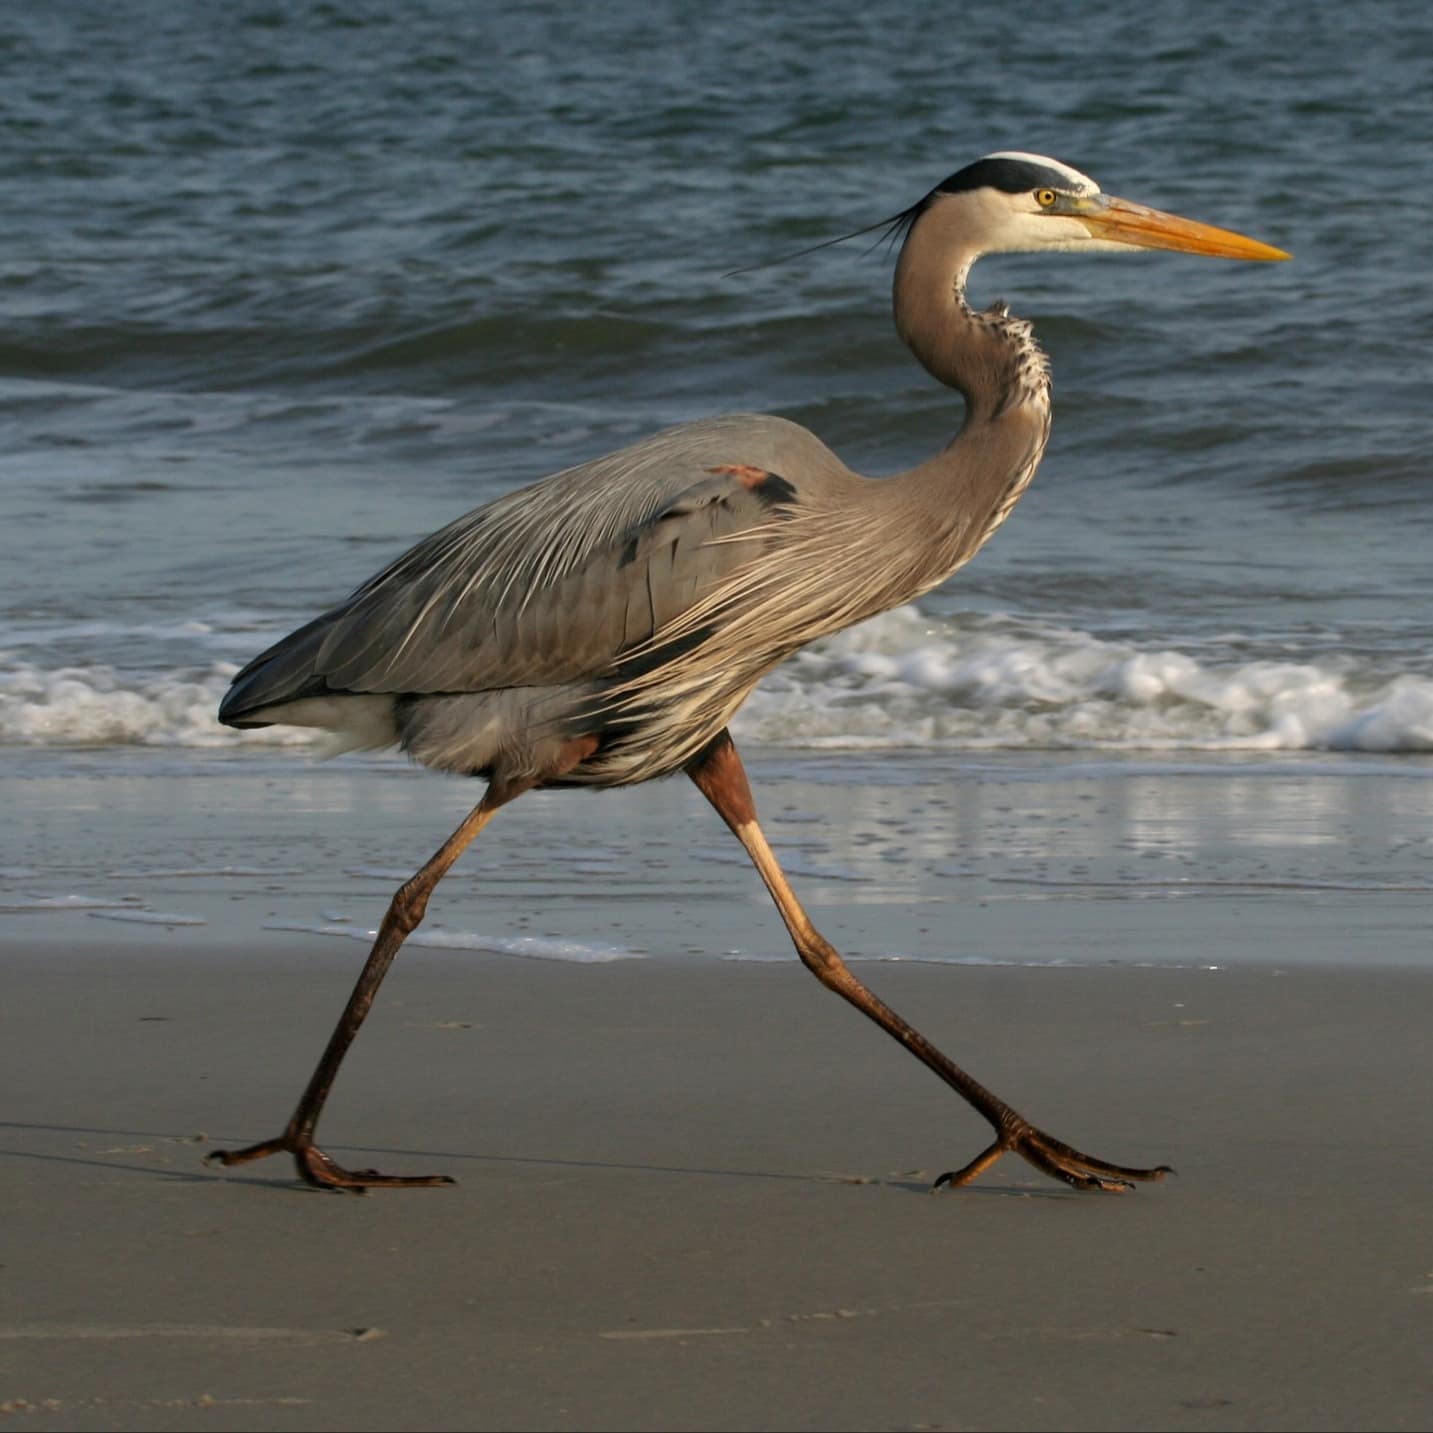 A blue heron strolls along the beach